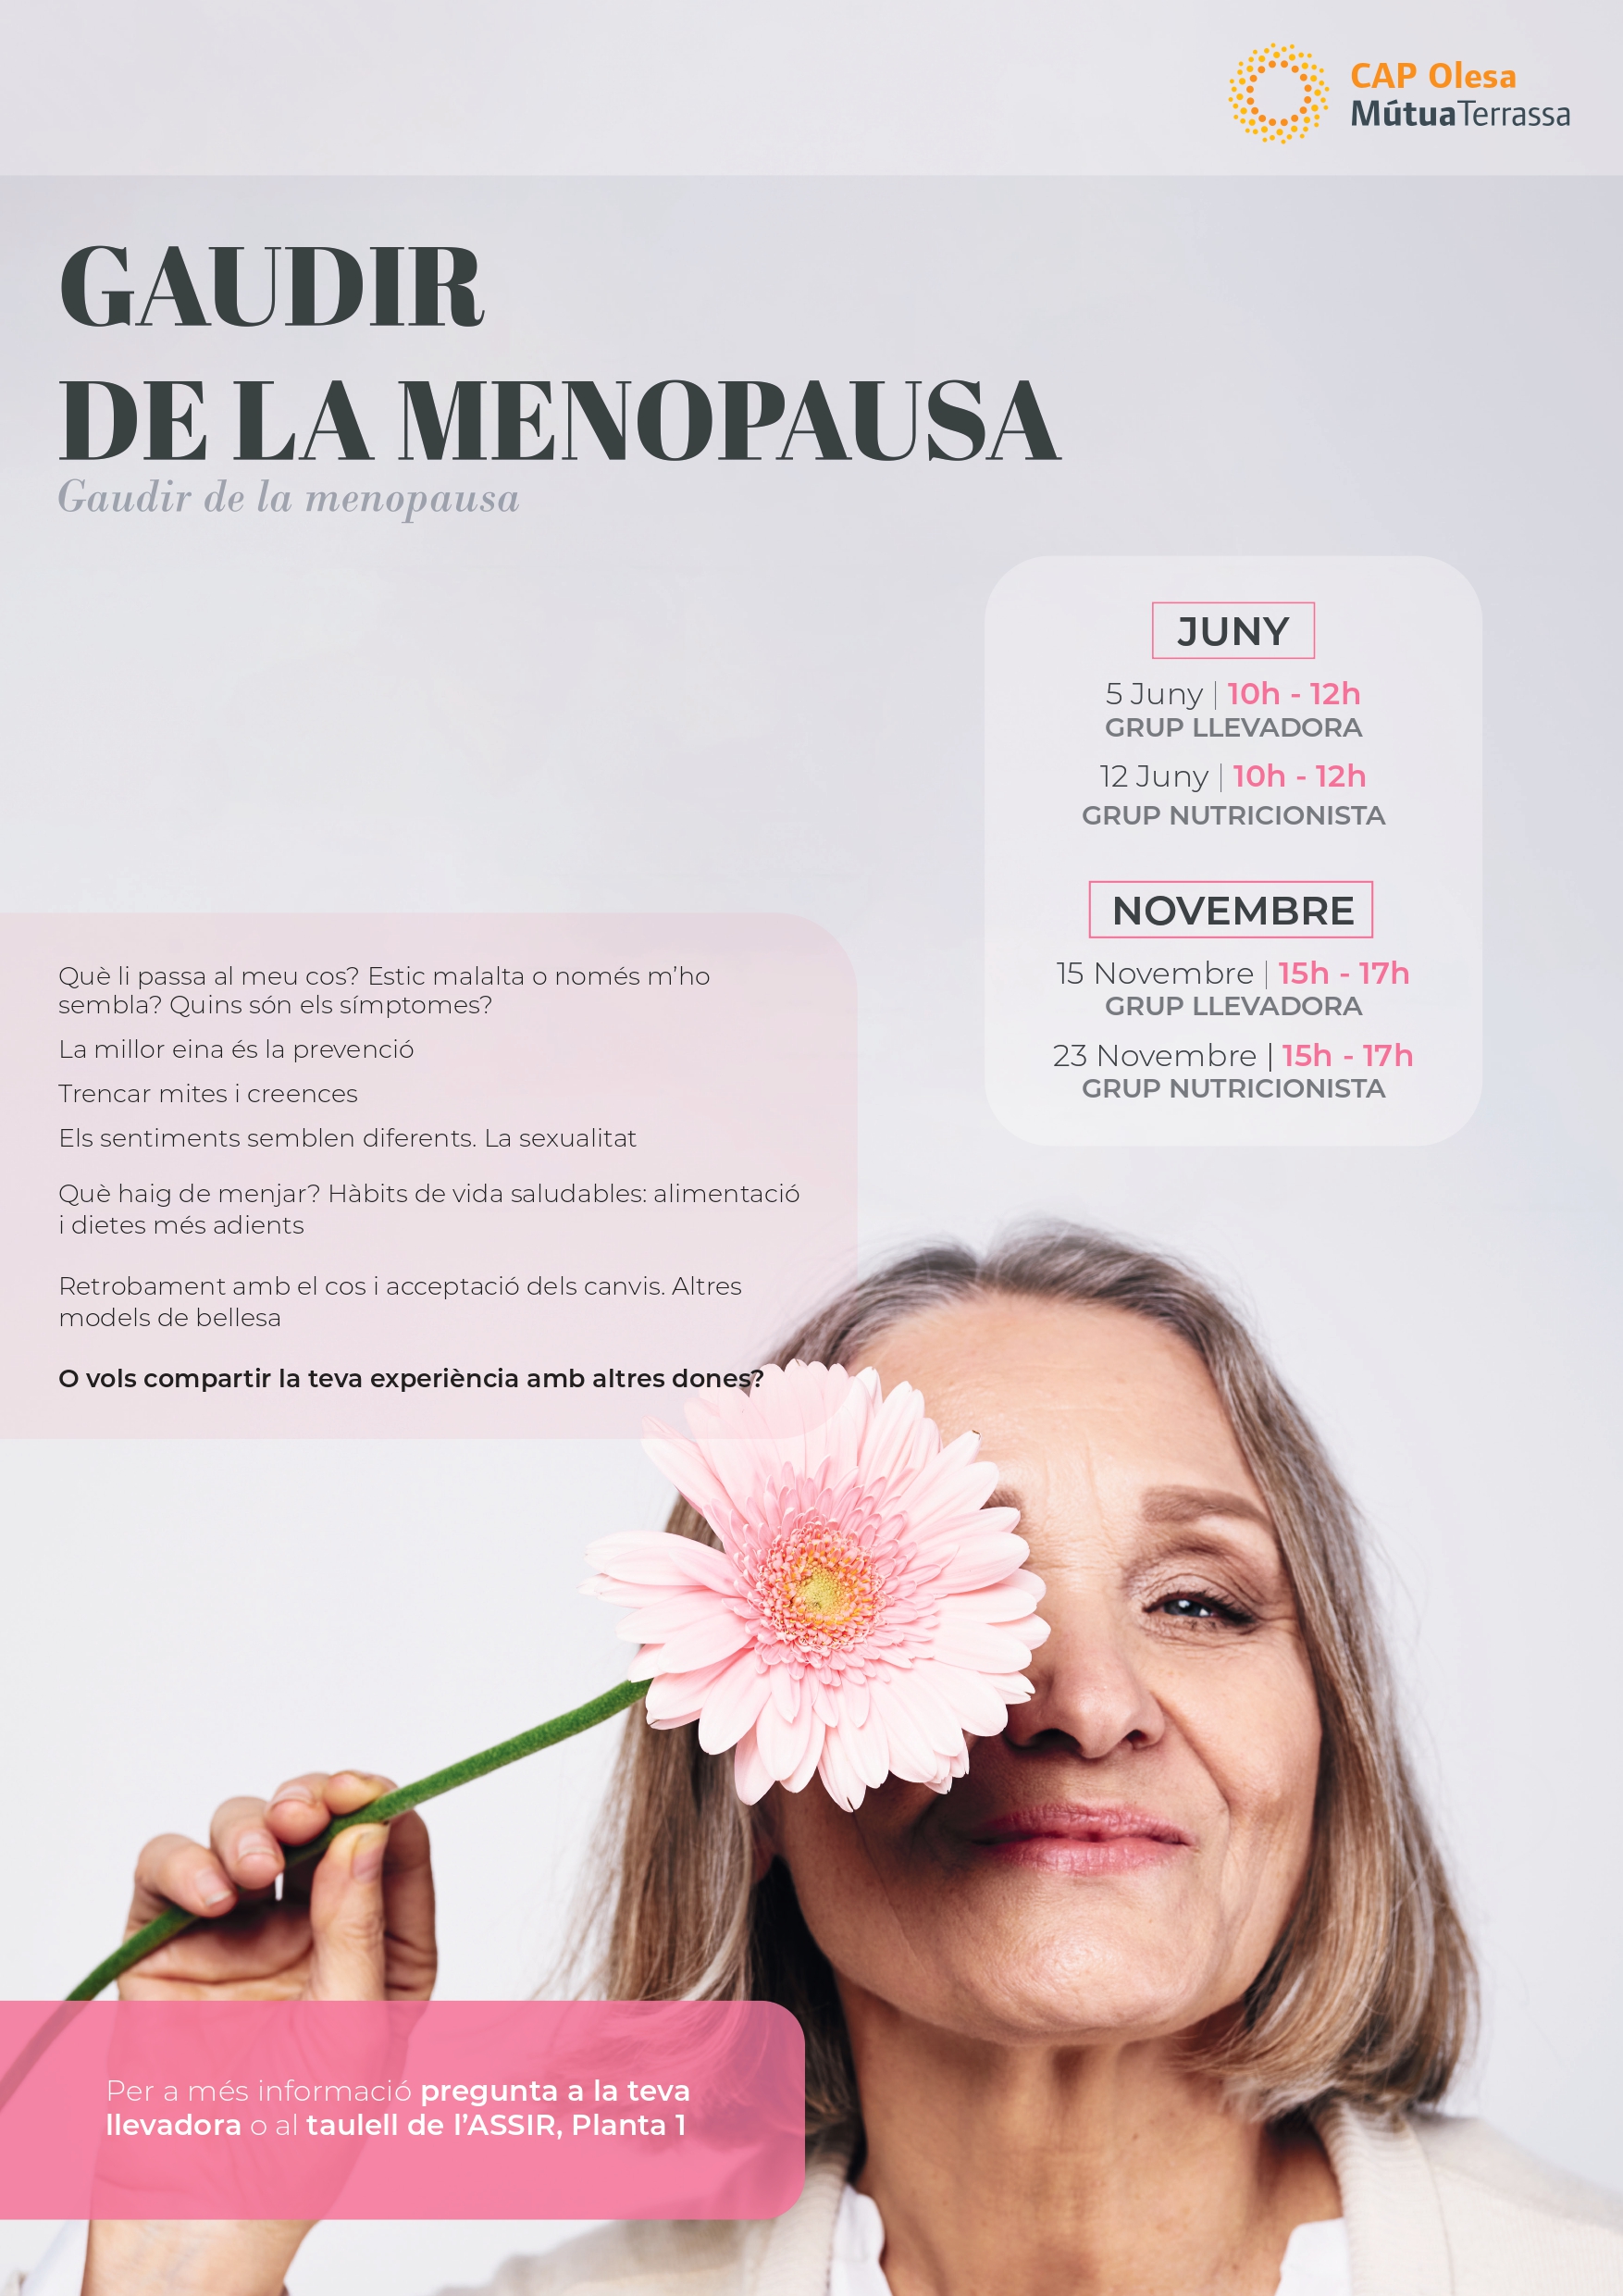 Tallers "Gaudir de la menopausa" organitzats pel CAP Olesa